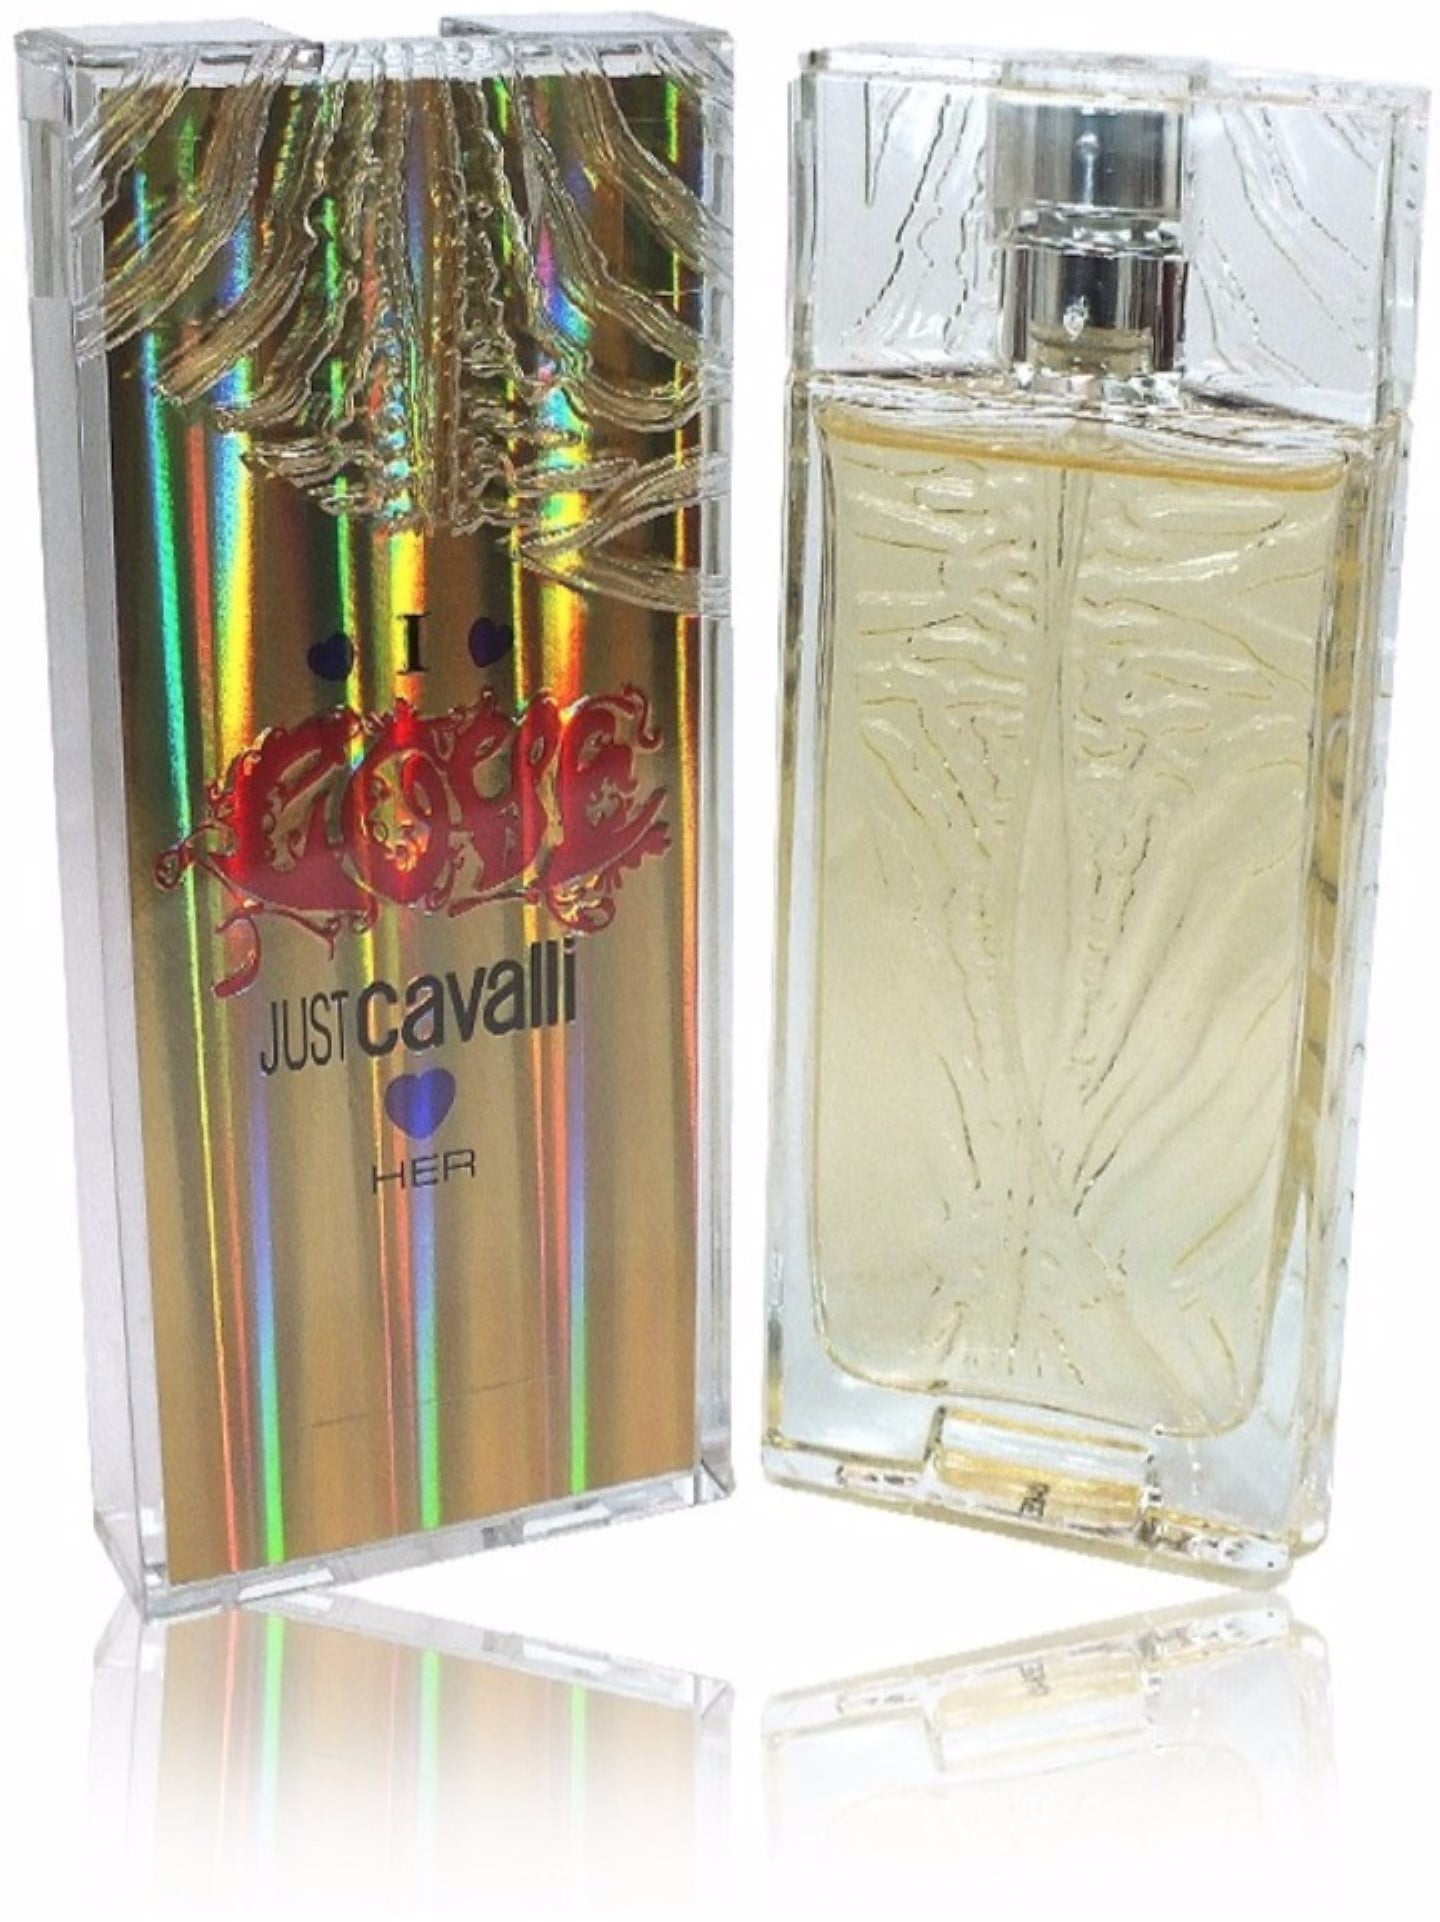 Just Cavalli Gold for Her Eau de Parfum Spray by Roberto Cavalli